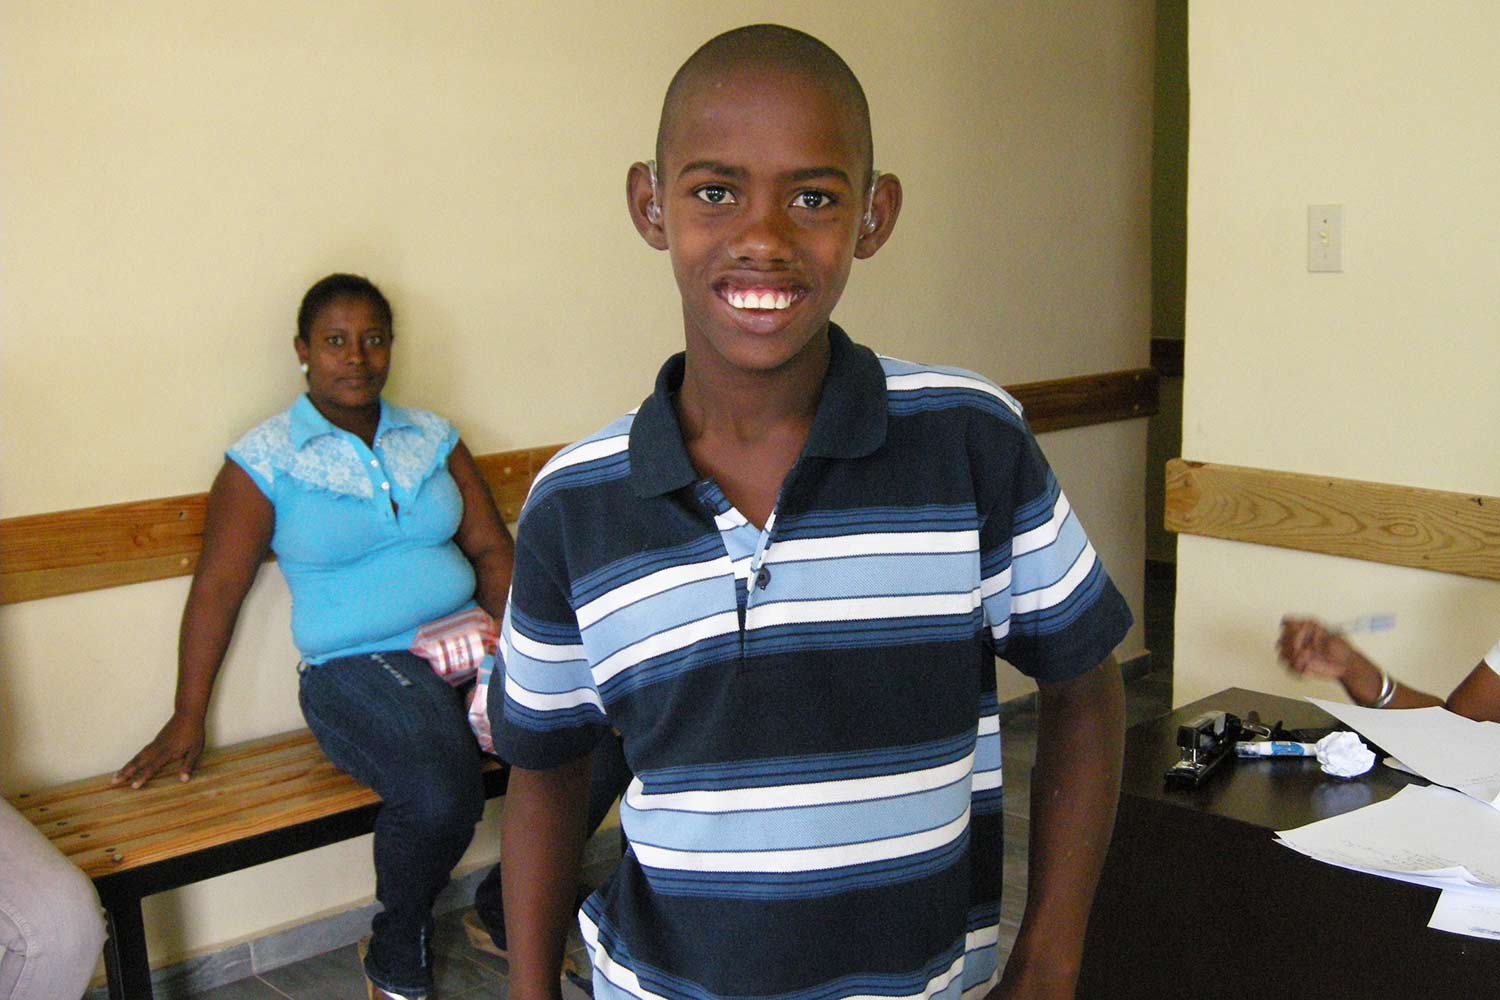 Boy Hearing Aids in Dominican Republic